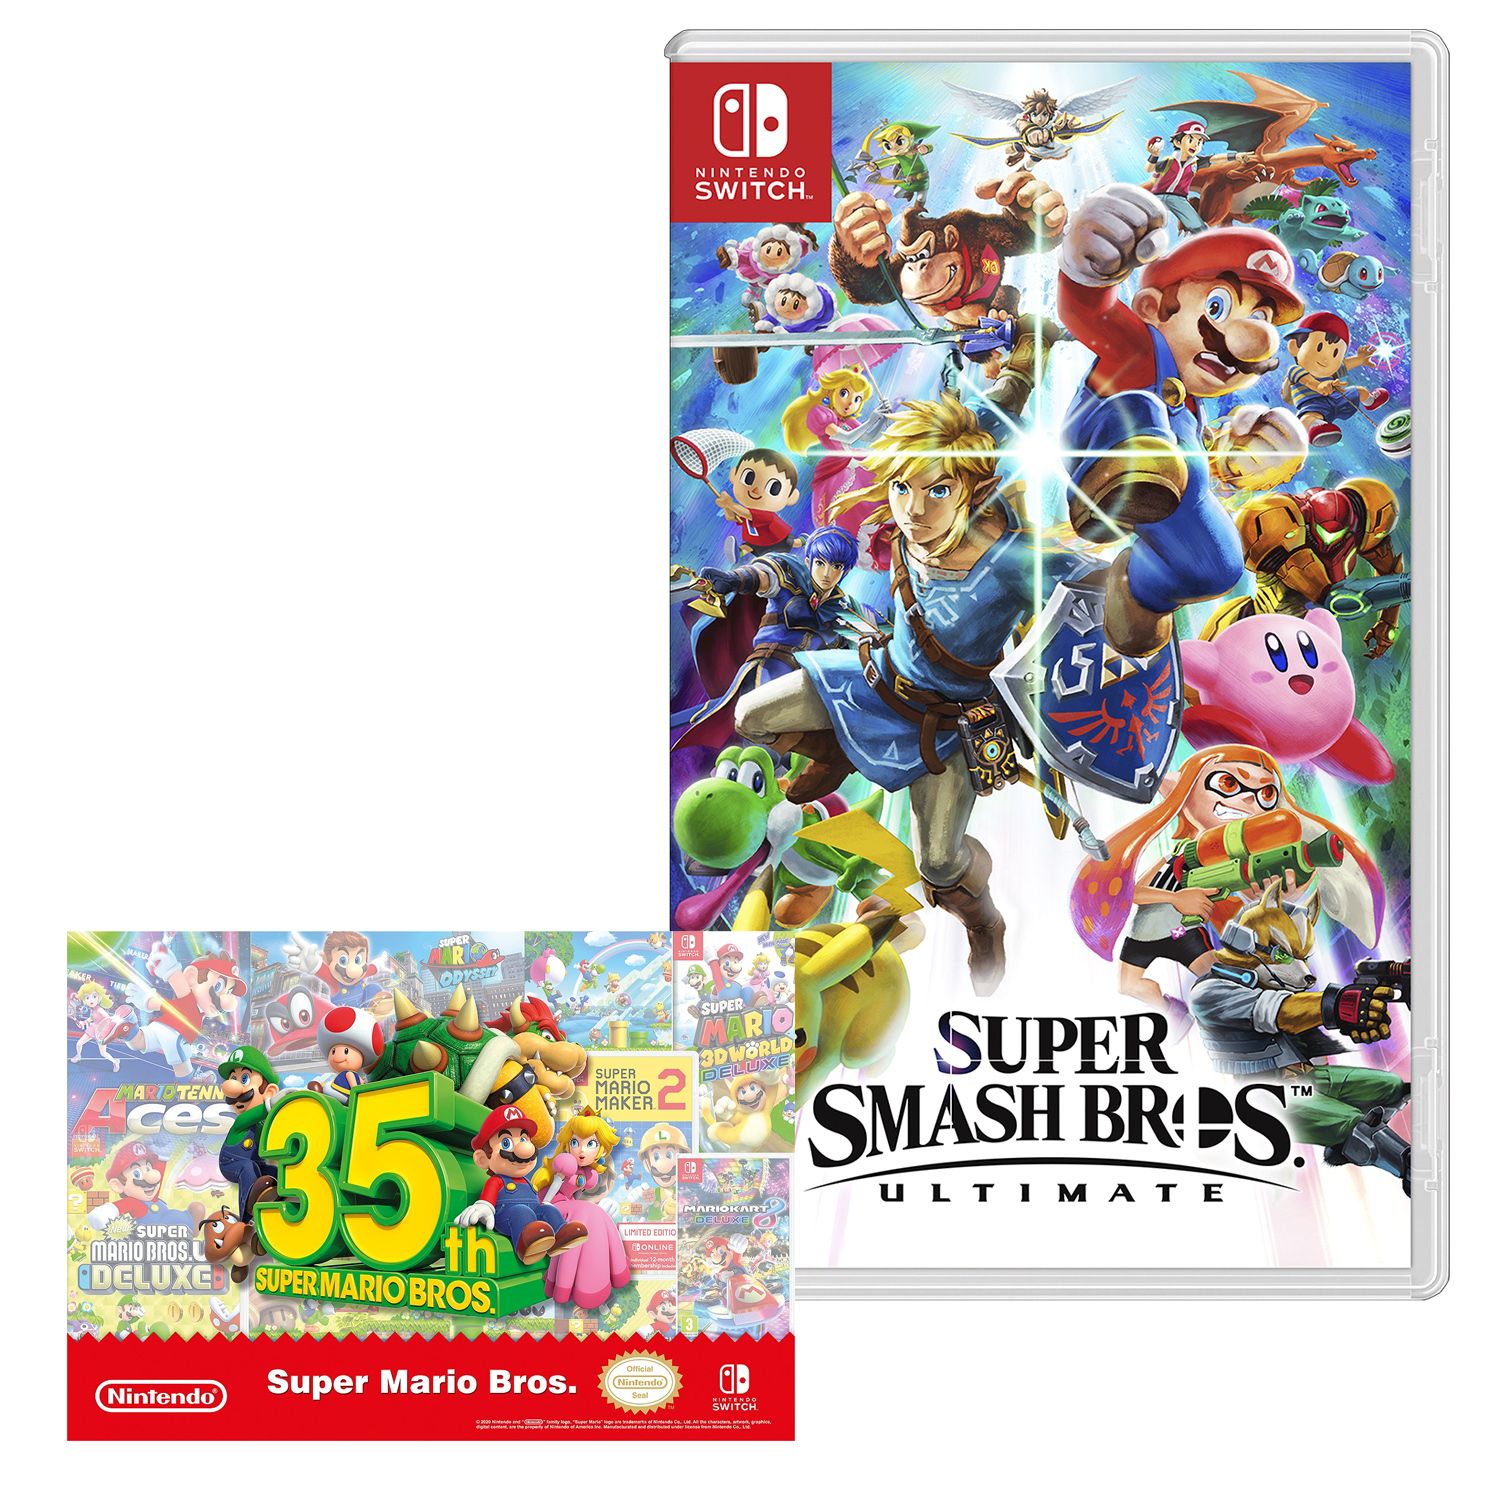 Super smash bros ultimate Nintendo Switch + poster